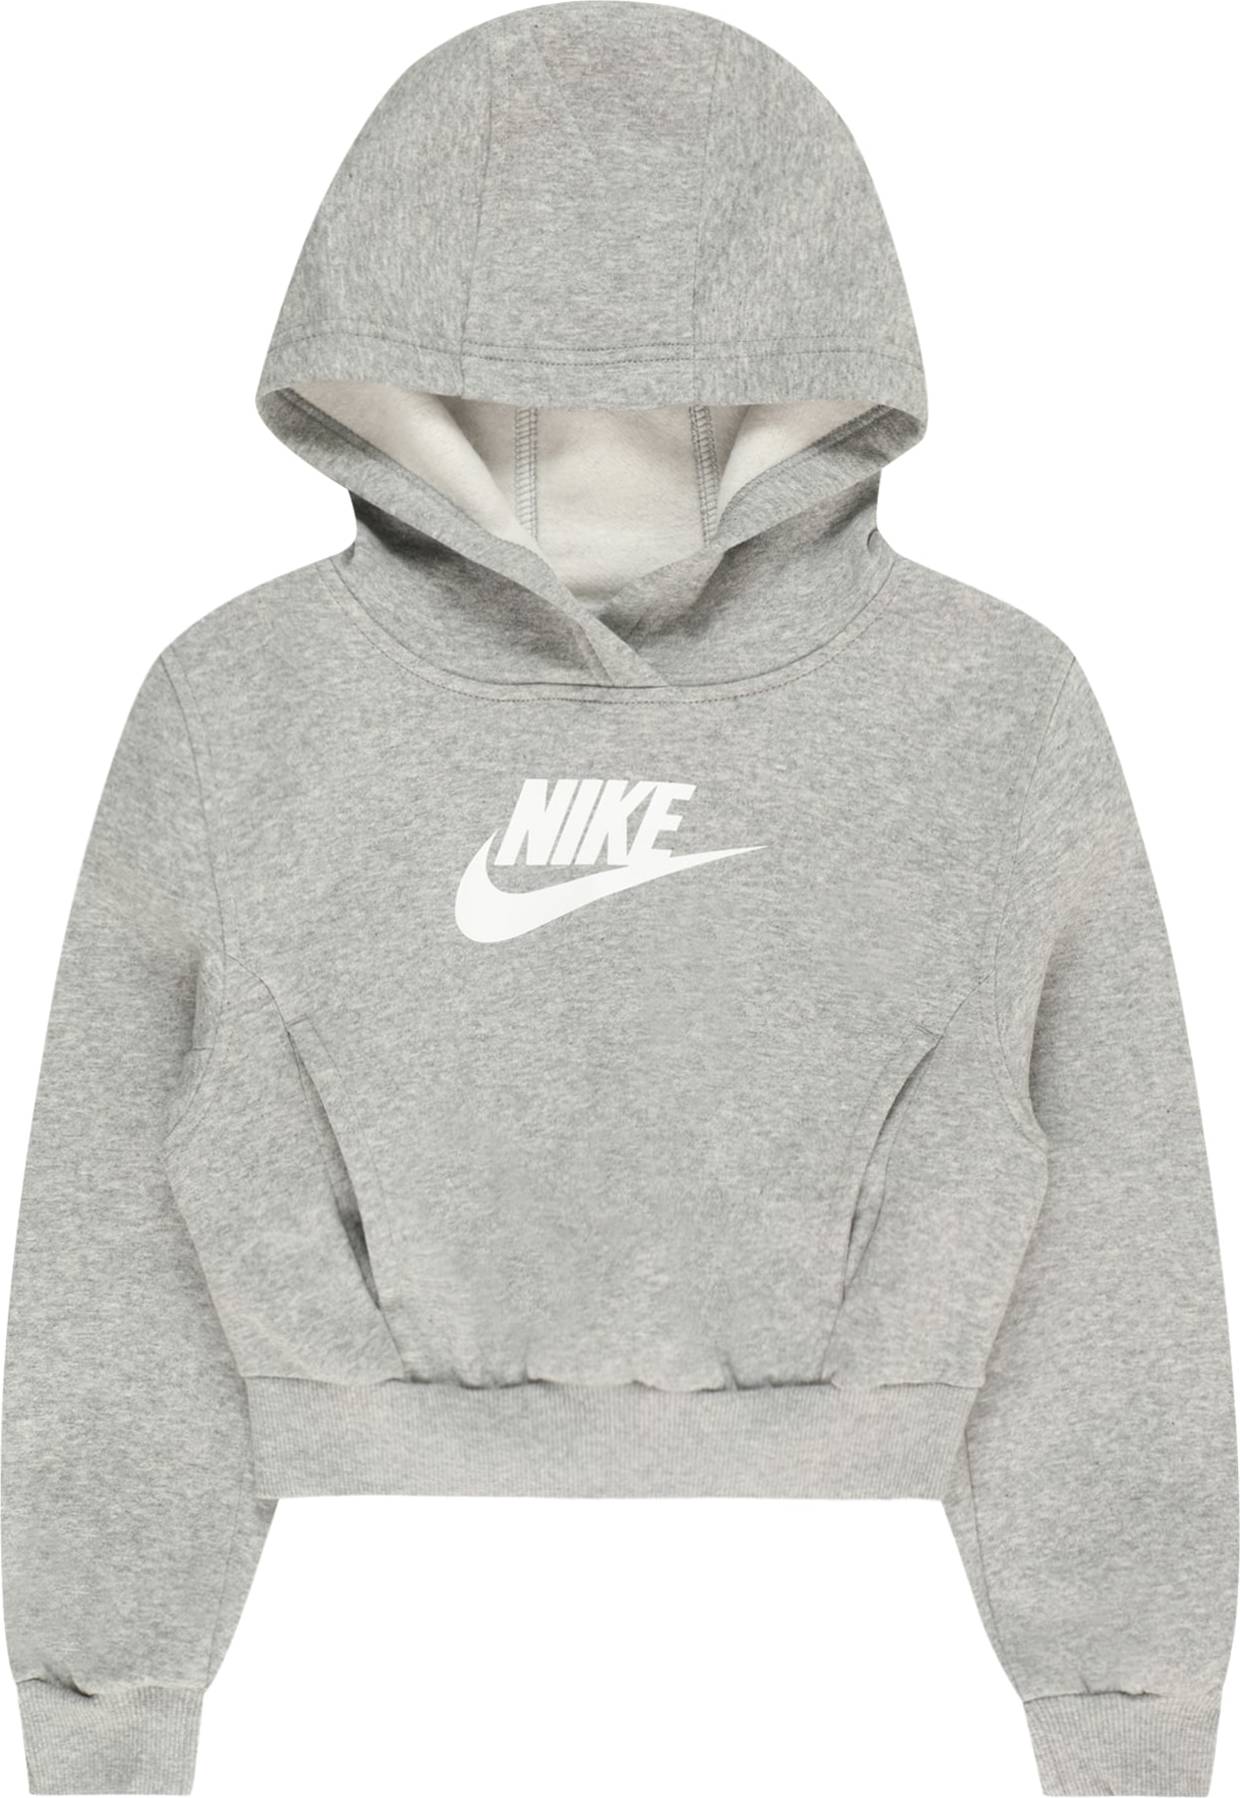 Mikina Nike Sportswear šedá / bílá